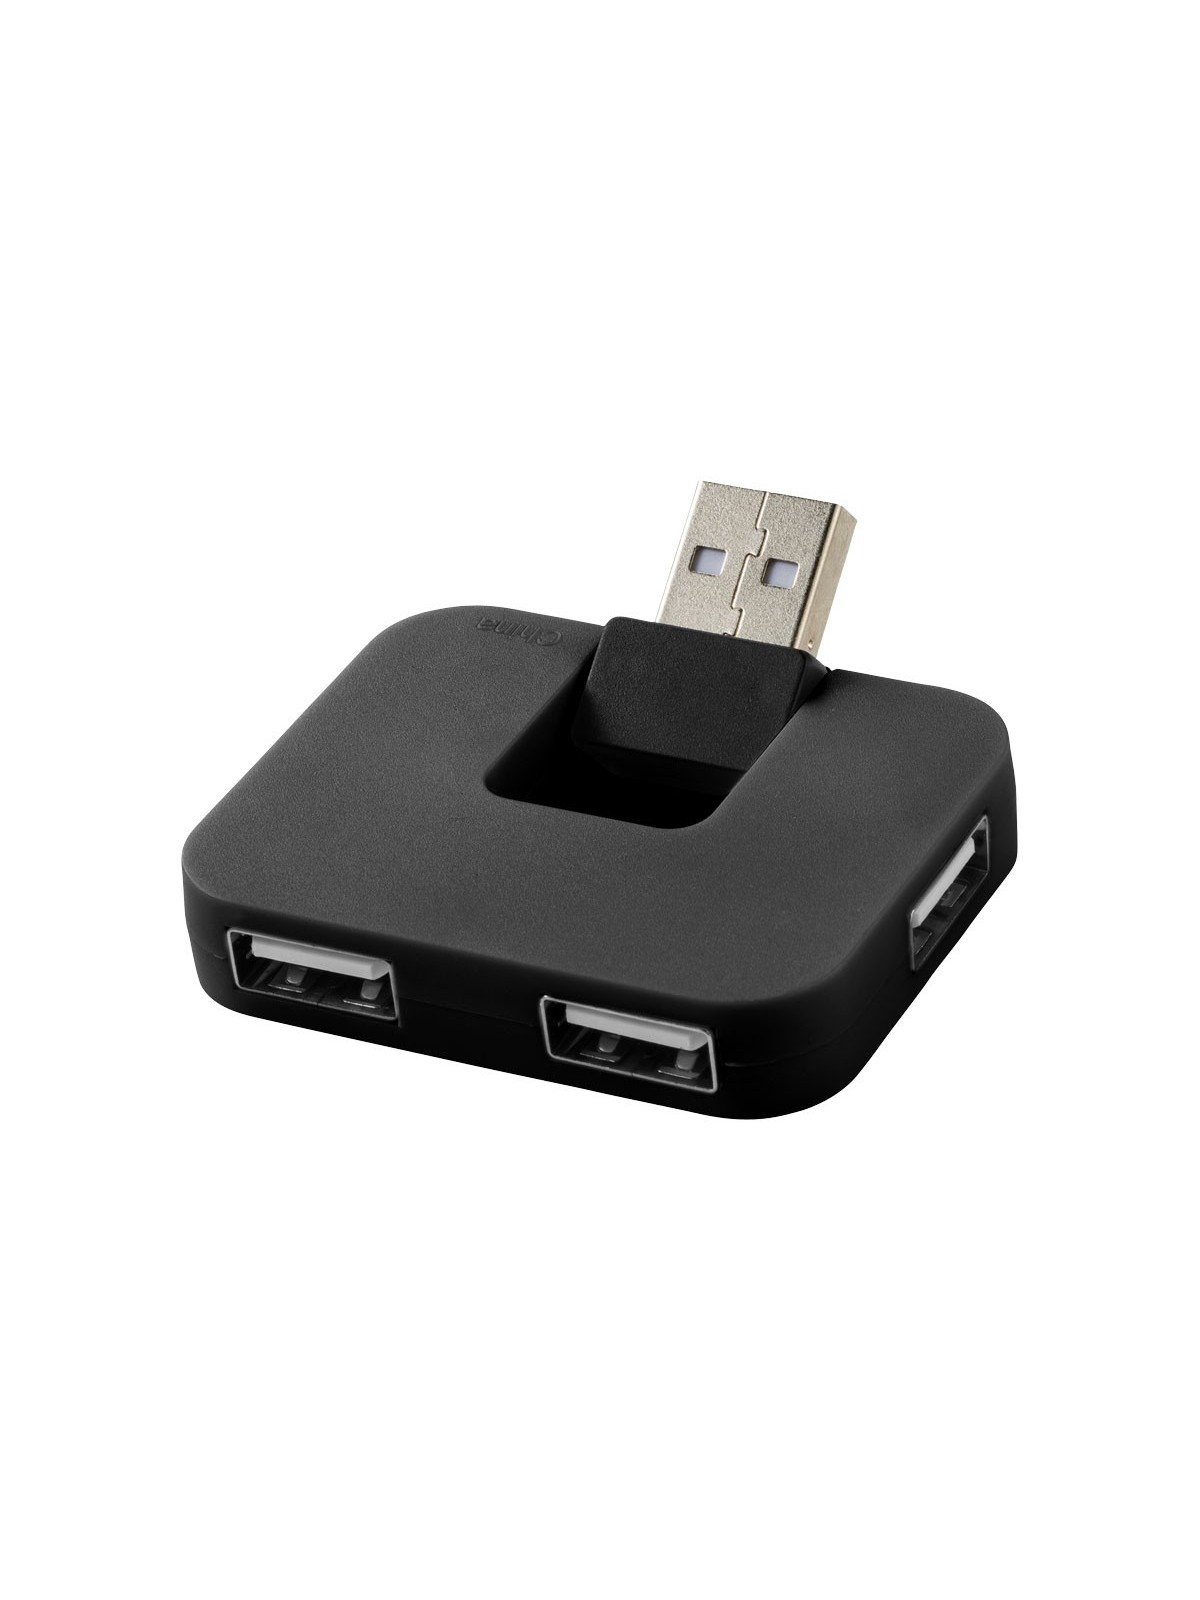 28-007 Hub USB 4 ports Gaia personnalisé